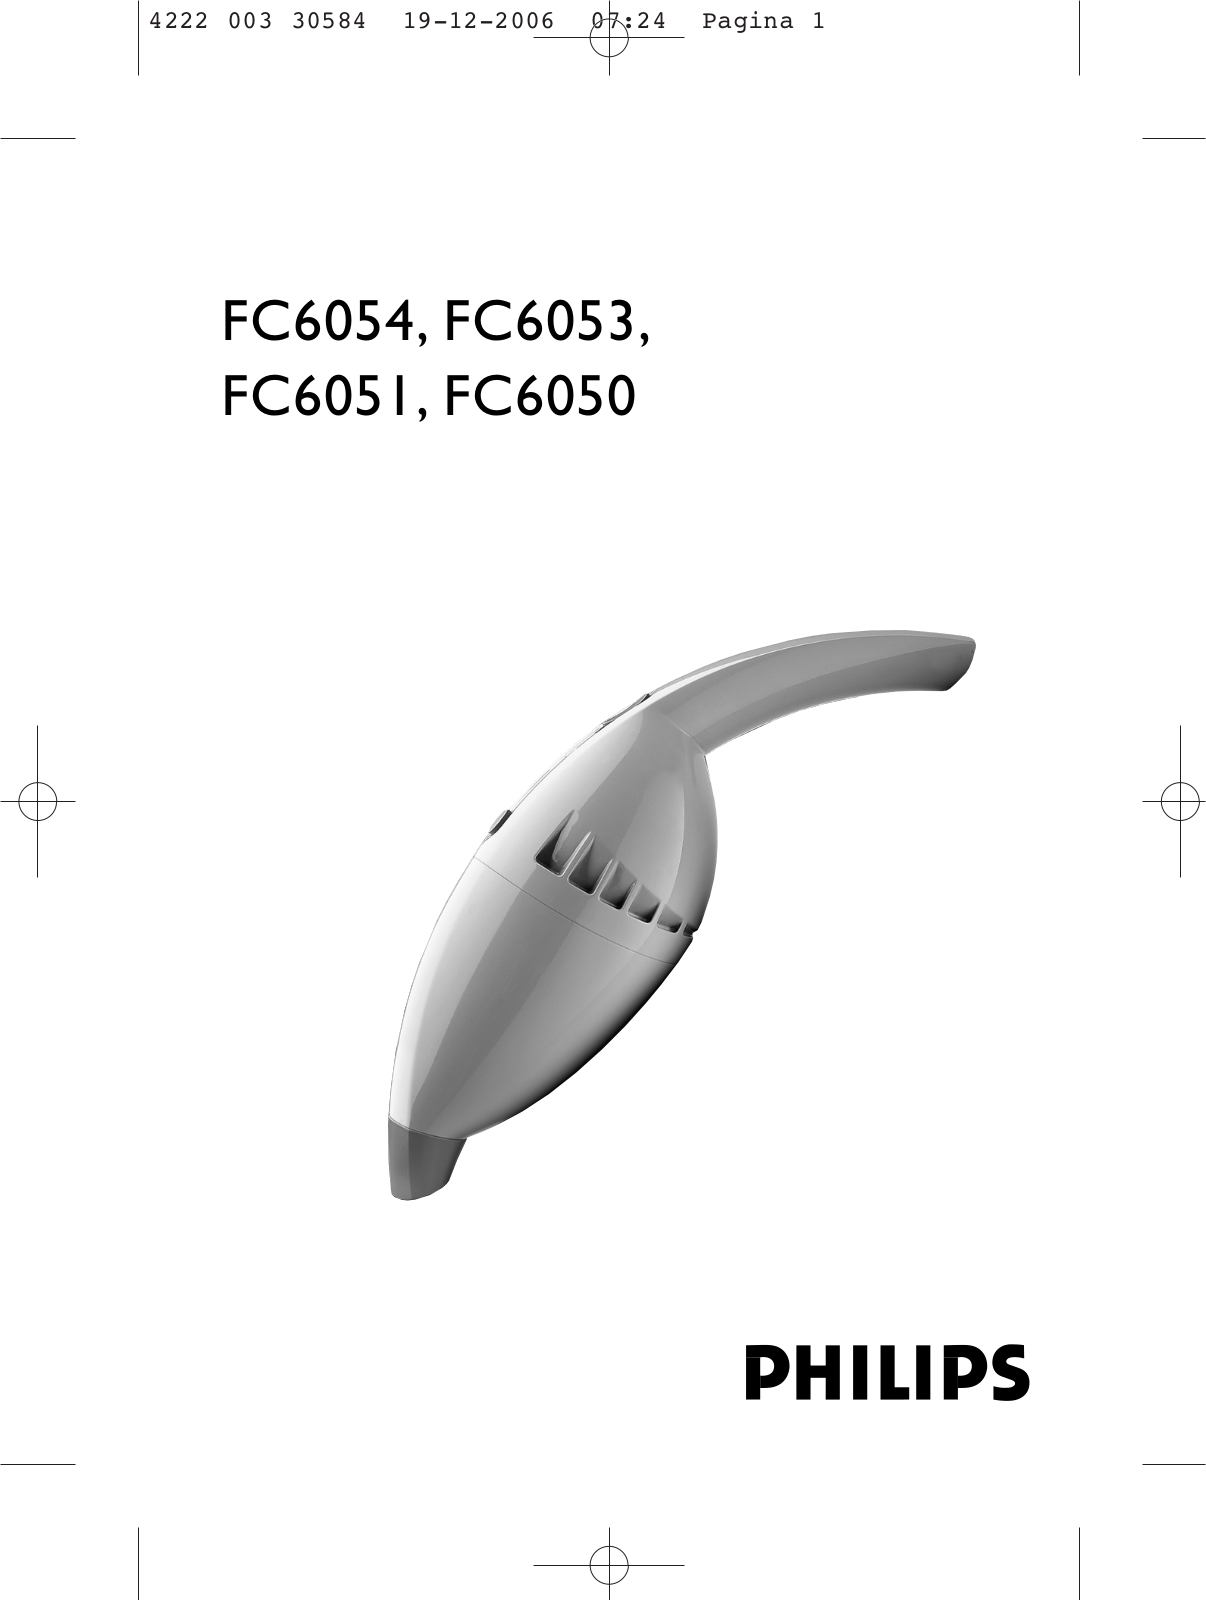 Philips FC6051 User Manual